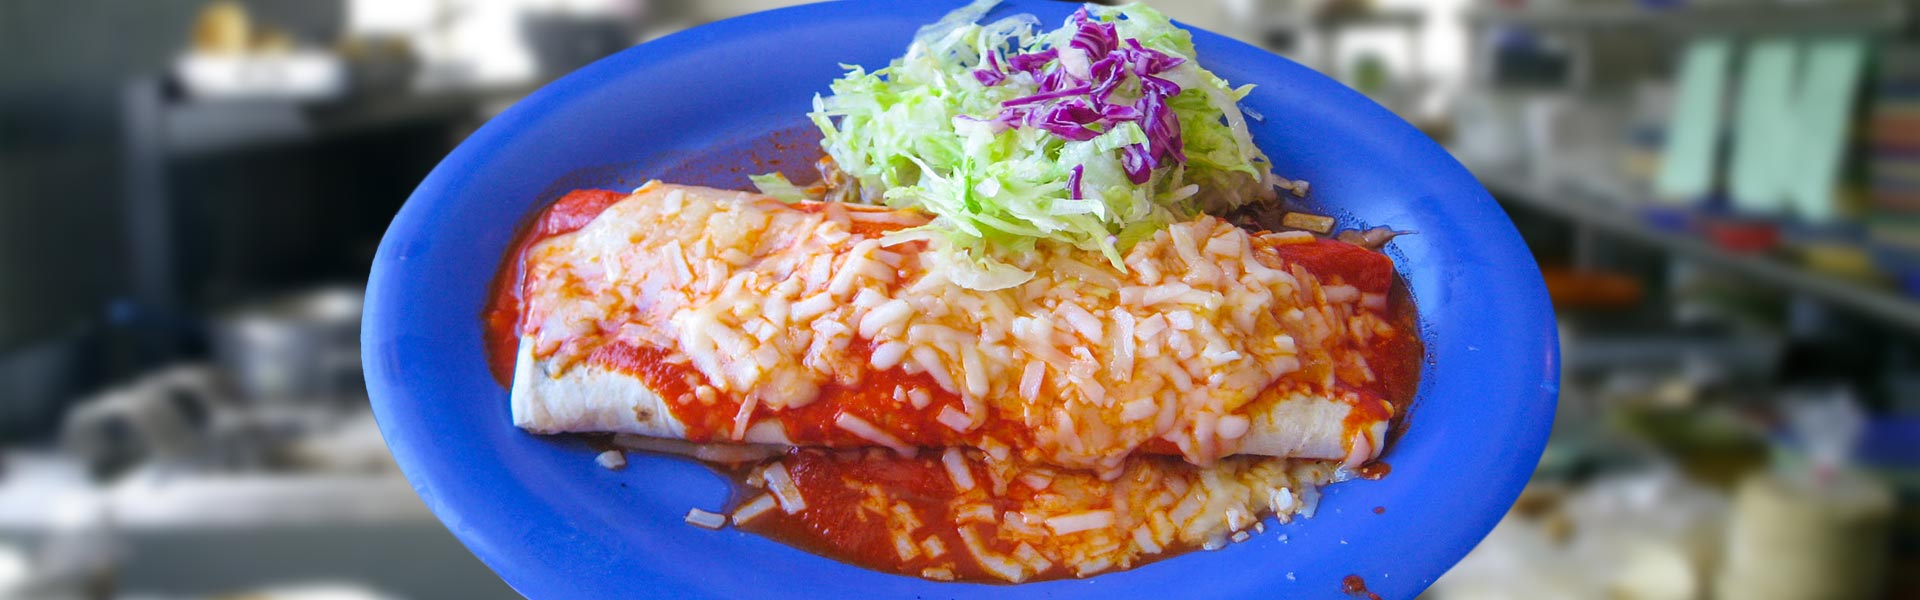 Enchilada Style Red Burrito